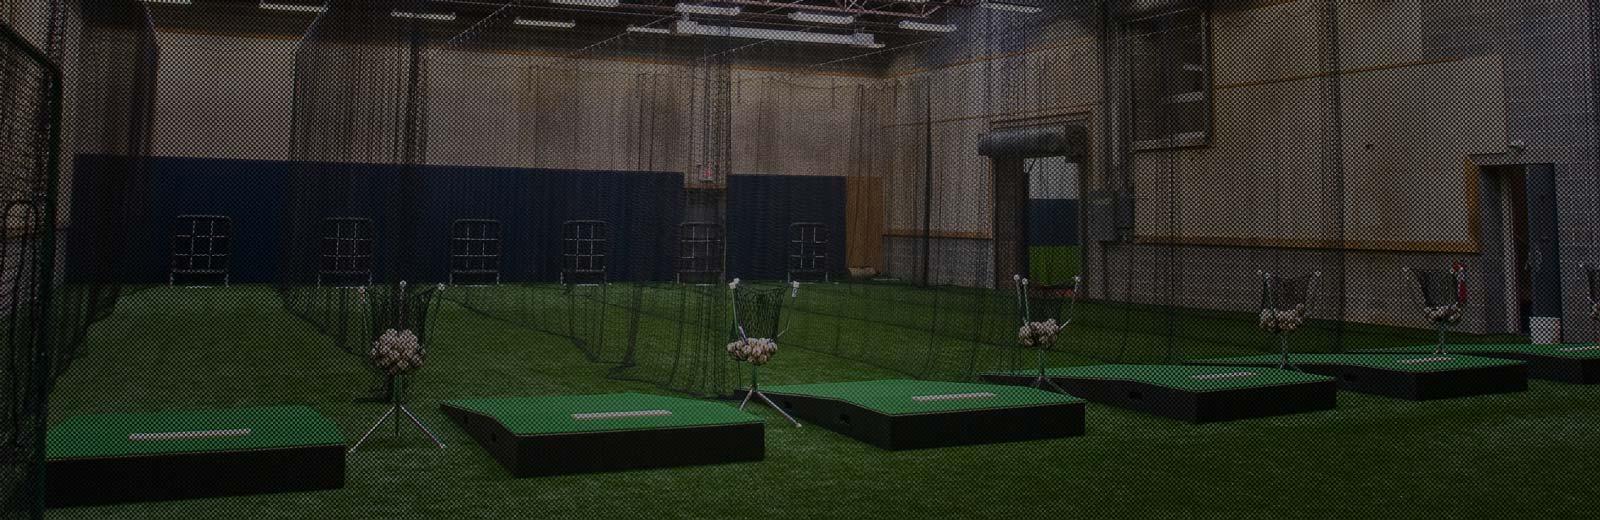 Indoor Facility Design For Baseball/Softball & Multisport Facilities